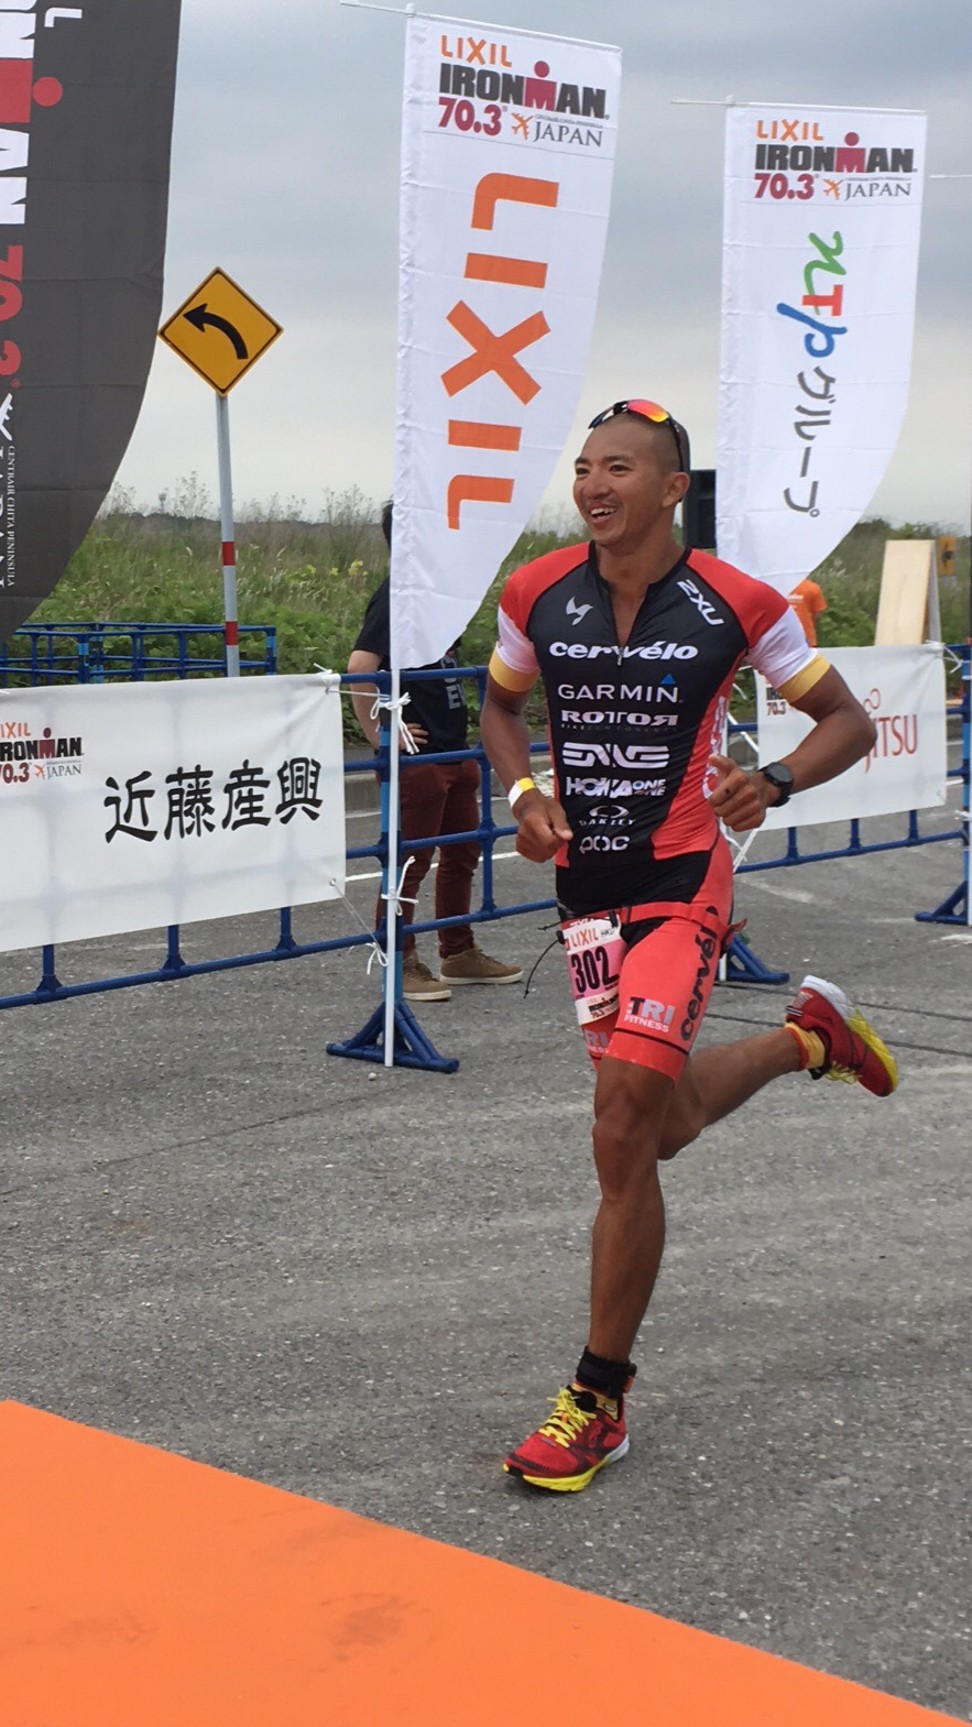 Nikke pædagog ligevægt Lifeguard becomes first Hongkonger to qualify for Ironman world  championships in Kona after agonising near misses | South China Morning Post